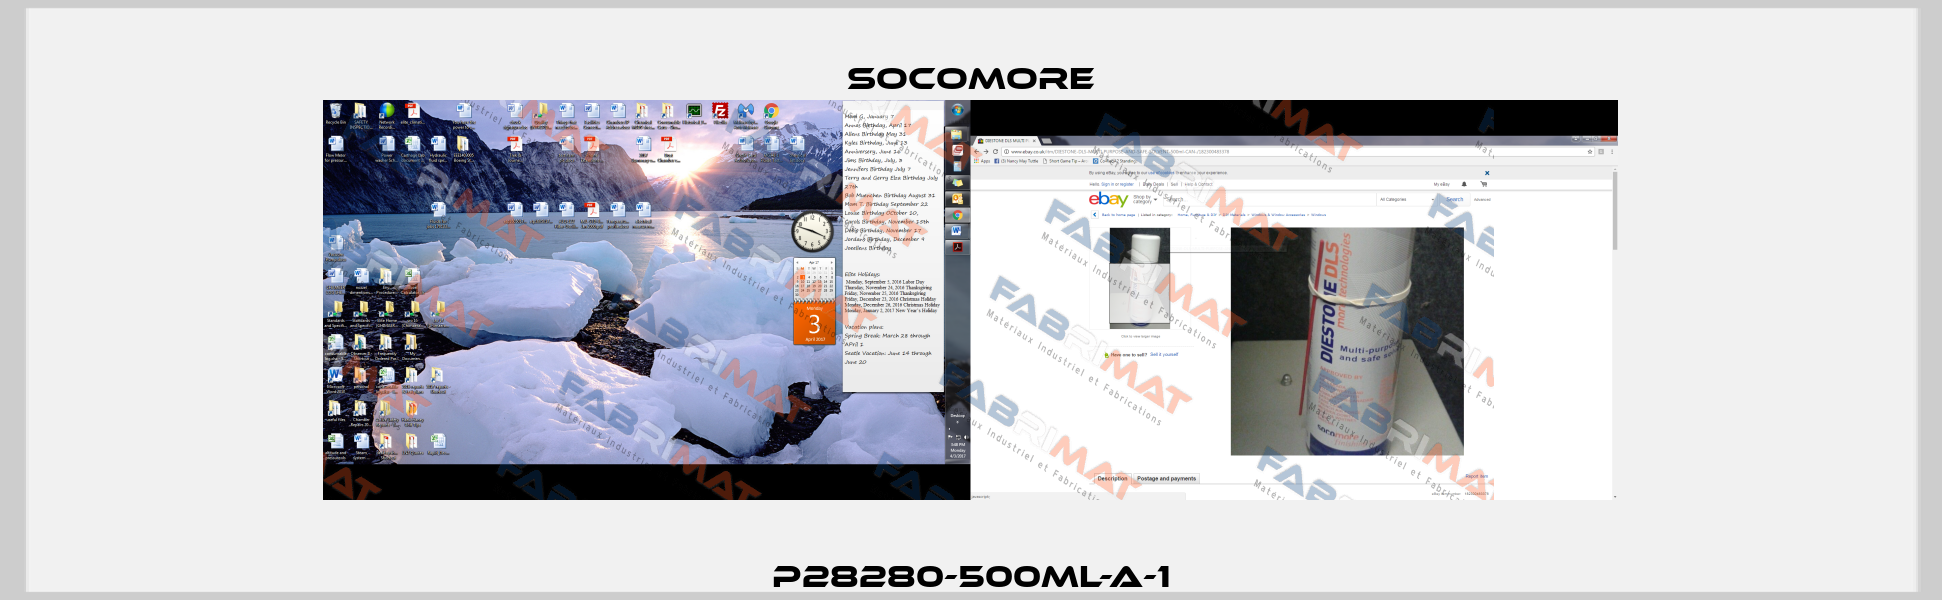 P28280-500ML-A-1 Socomore